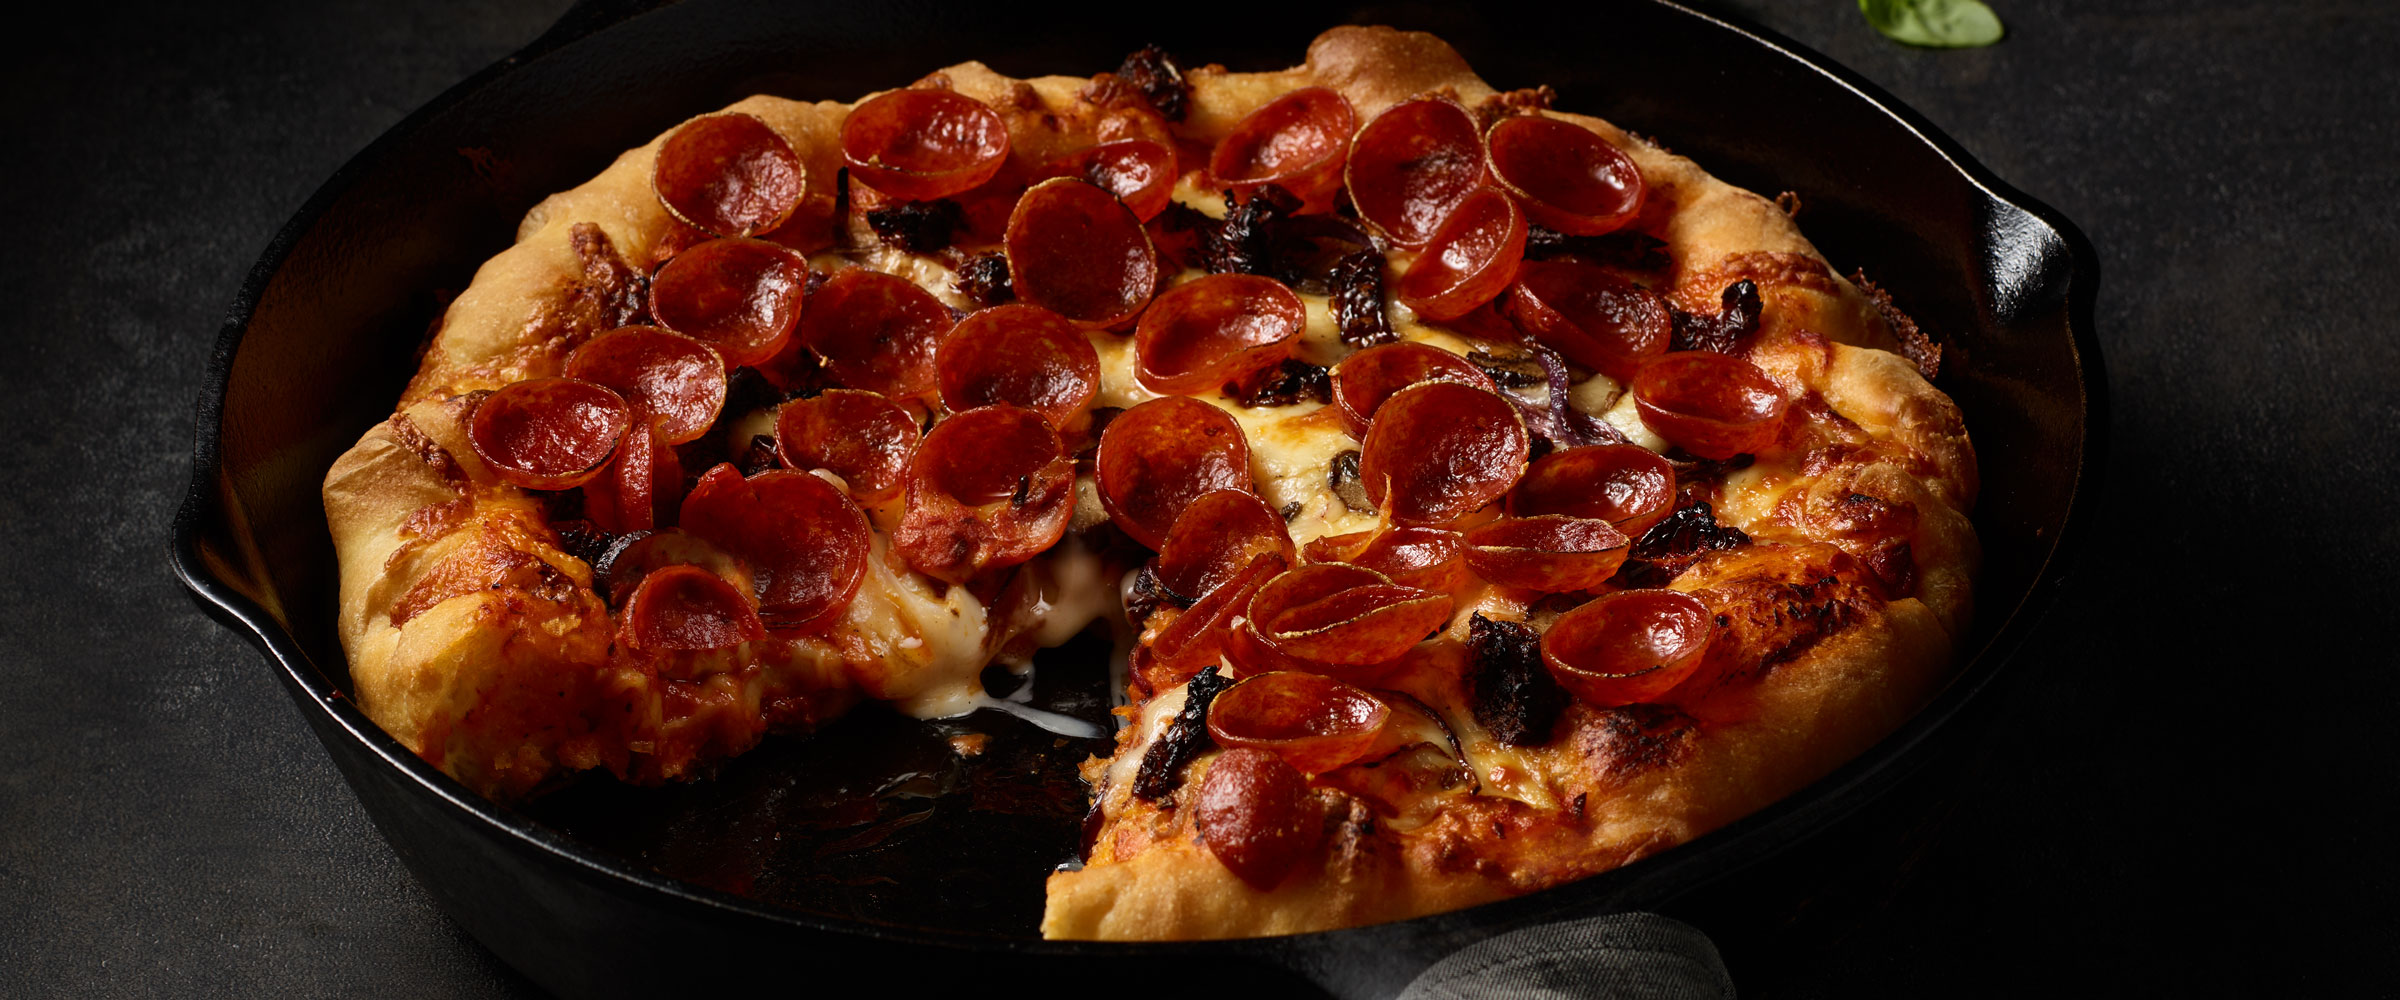 https://www.hormel.com/brands/hormel-pepperoni/wp-content/uploads/sites/3/Recipes_2400_Hormel_Cup-N-Crisp-Pepperoni_Fool_Proof_Pan_Pizza.jpg